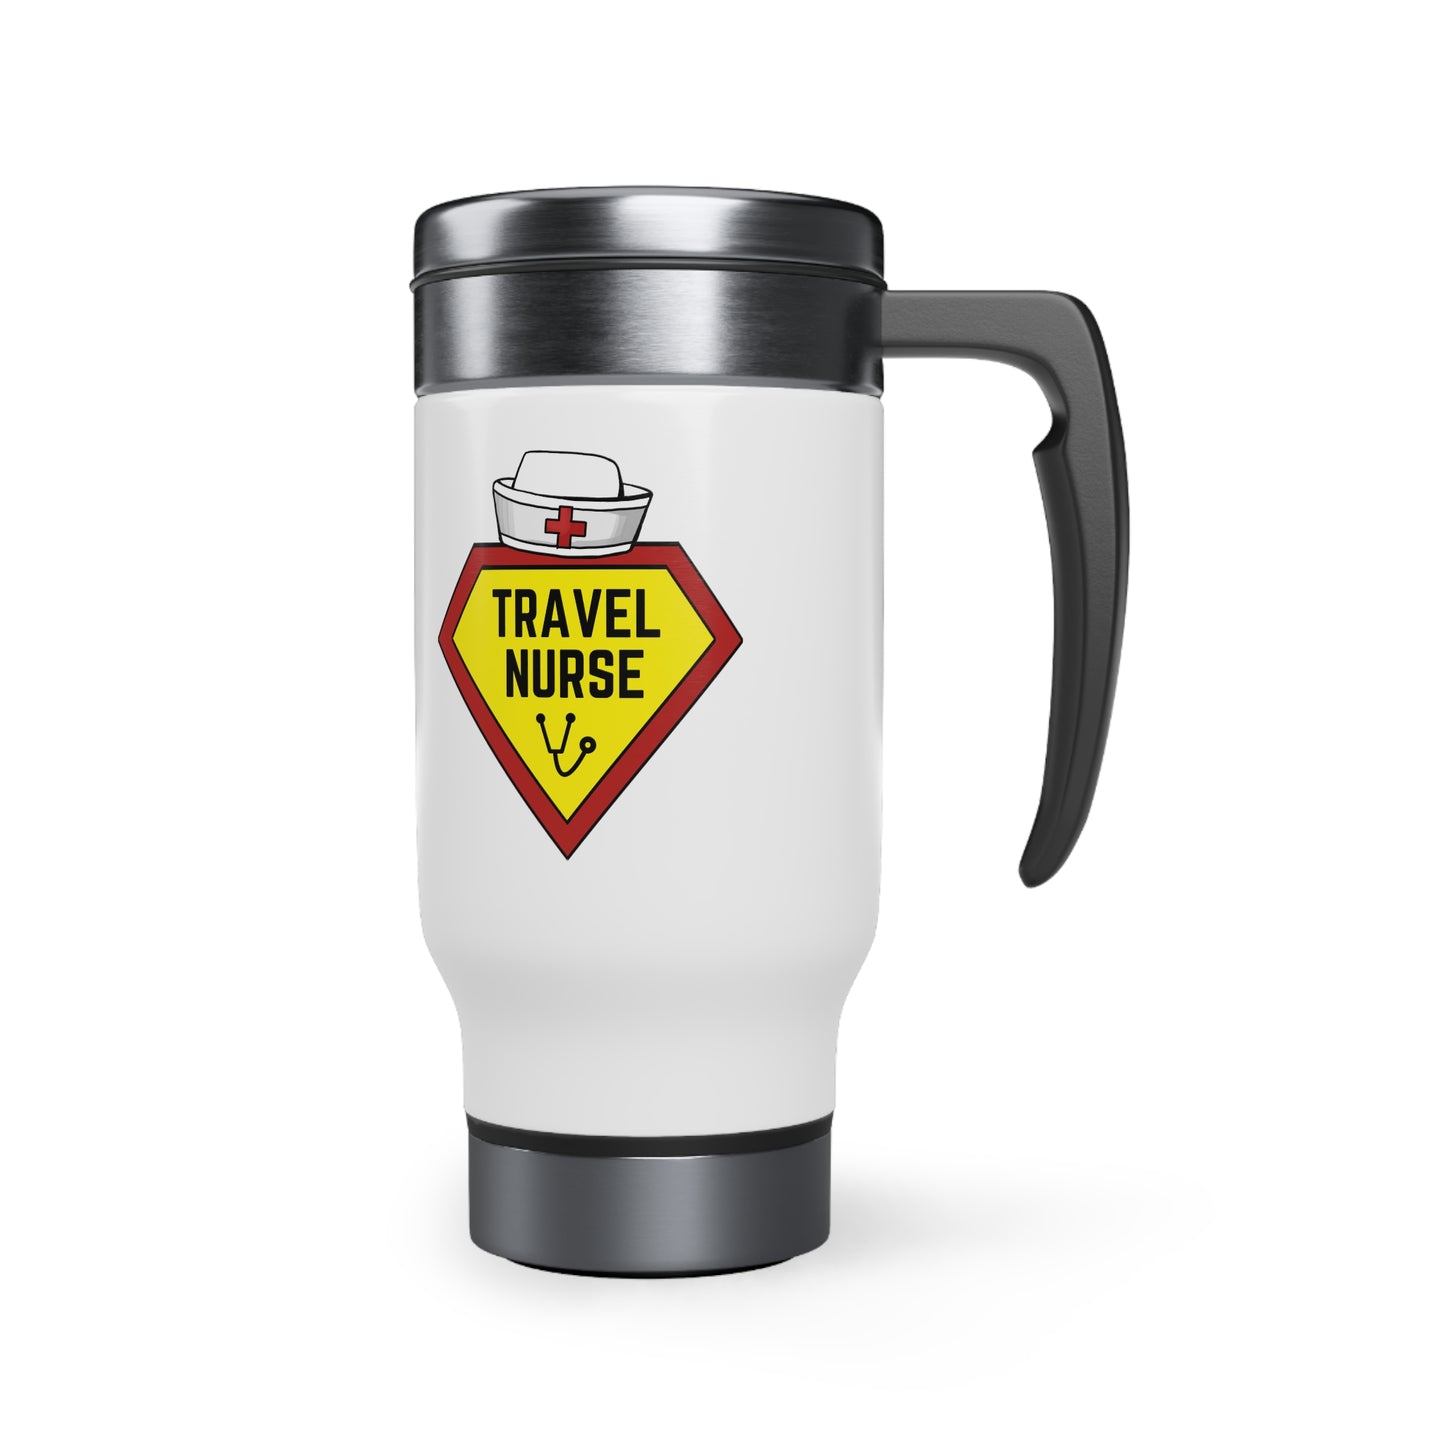 Travel Nurse Stainless Steel Travel Mug with Handle, 14oz